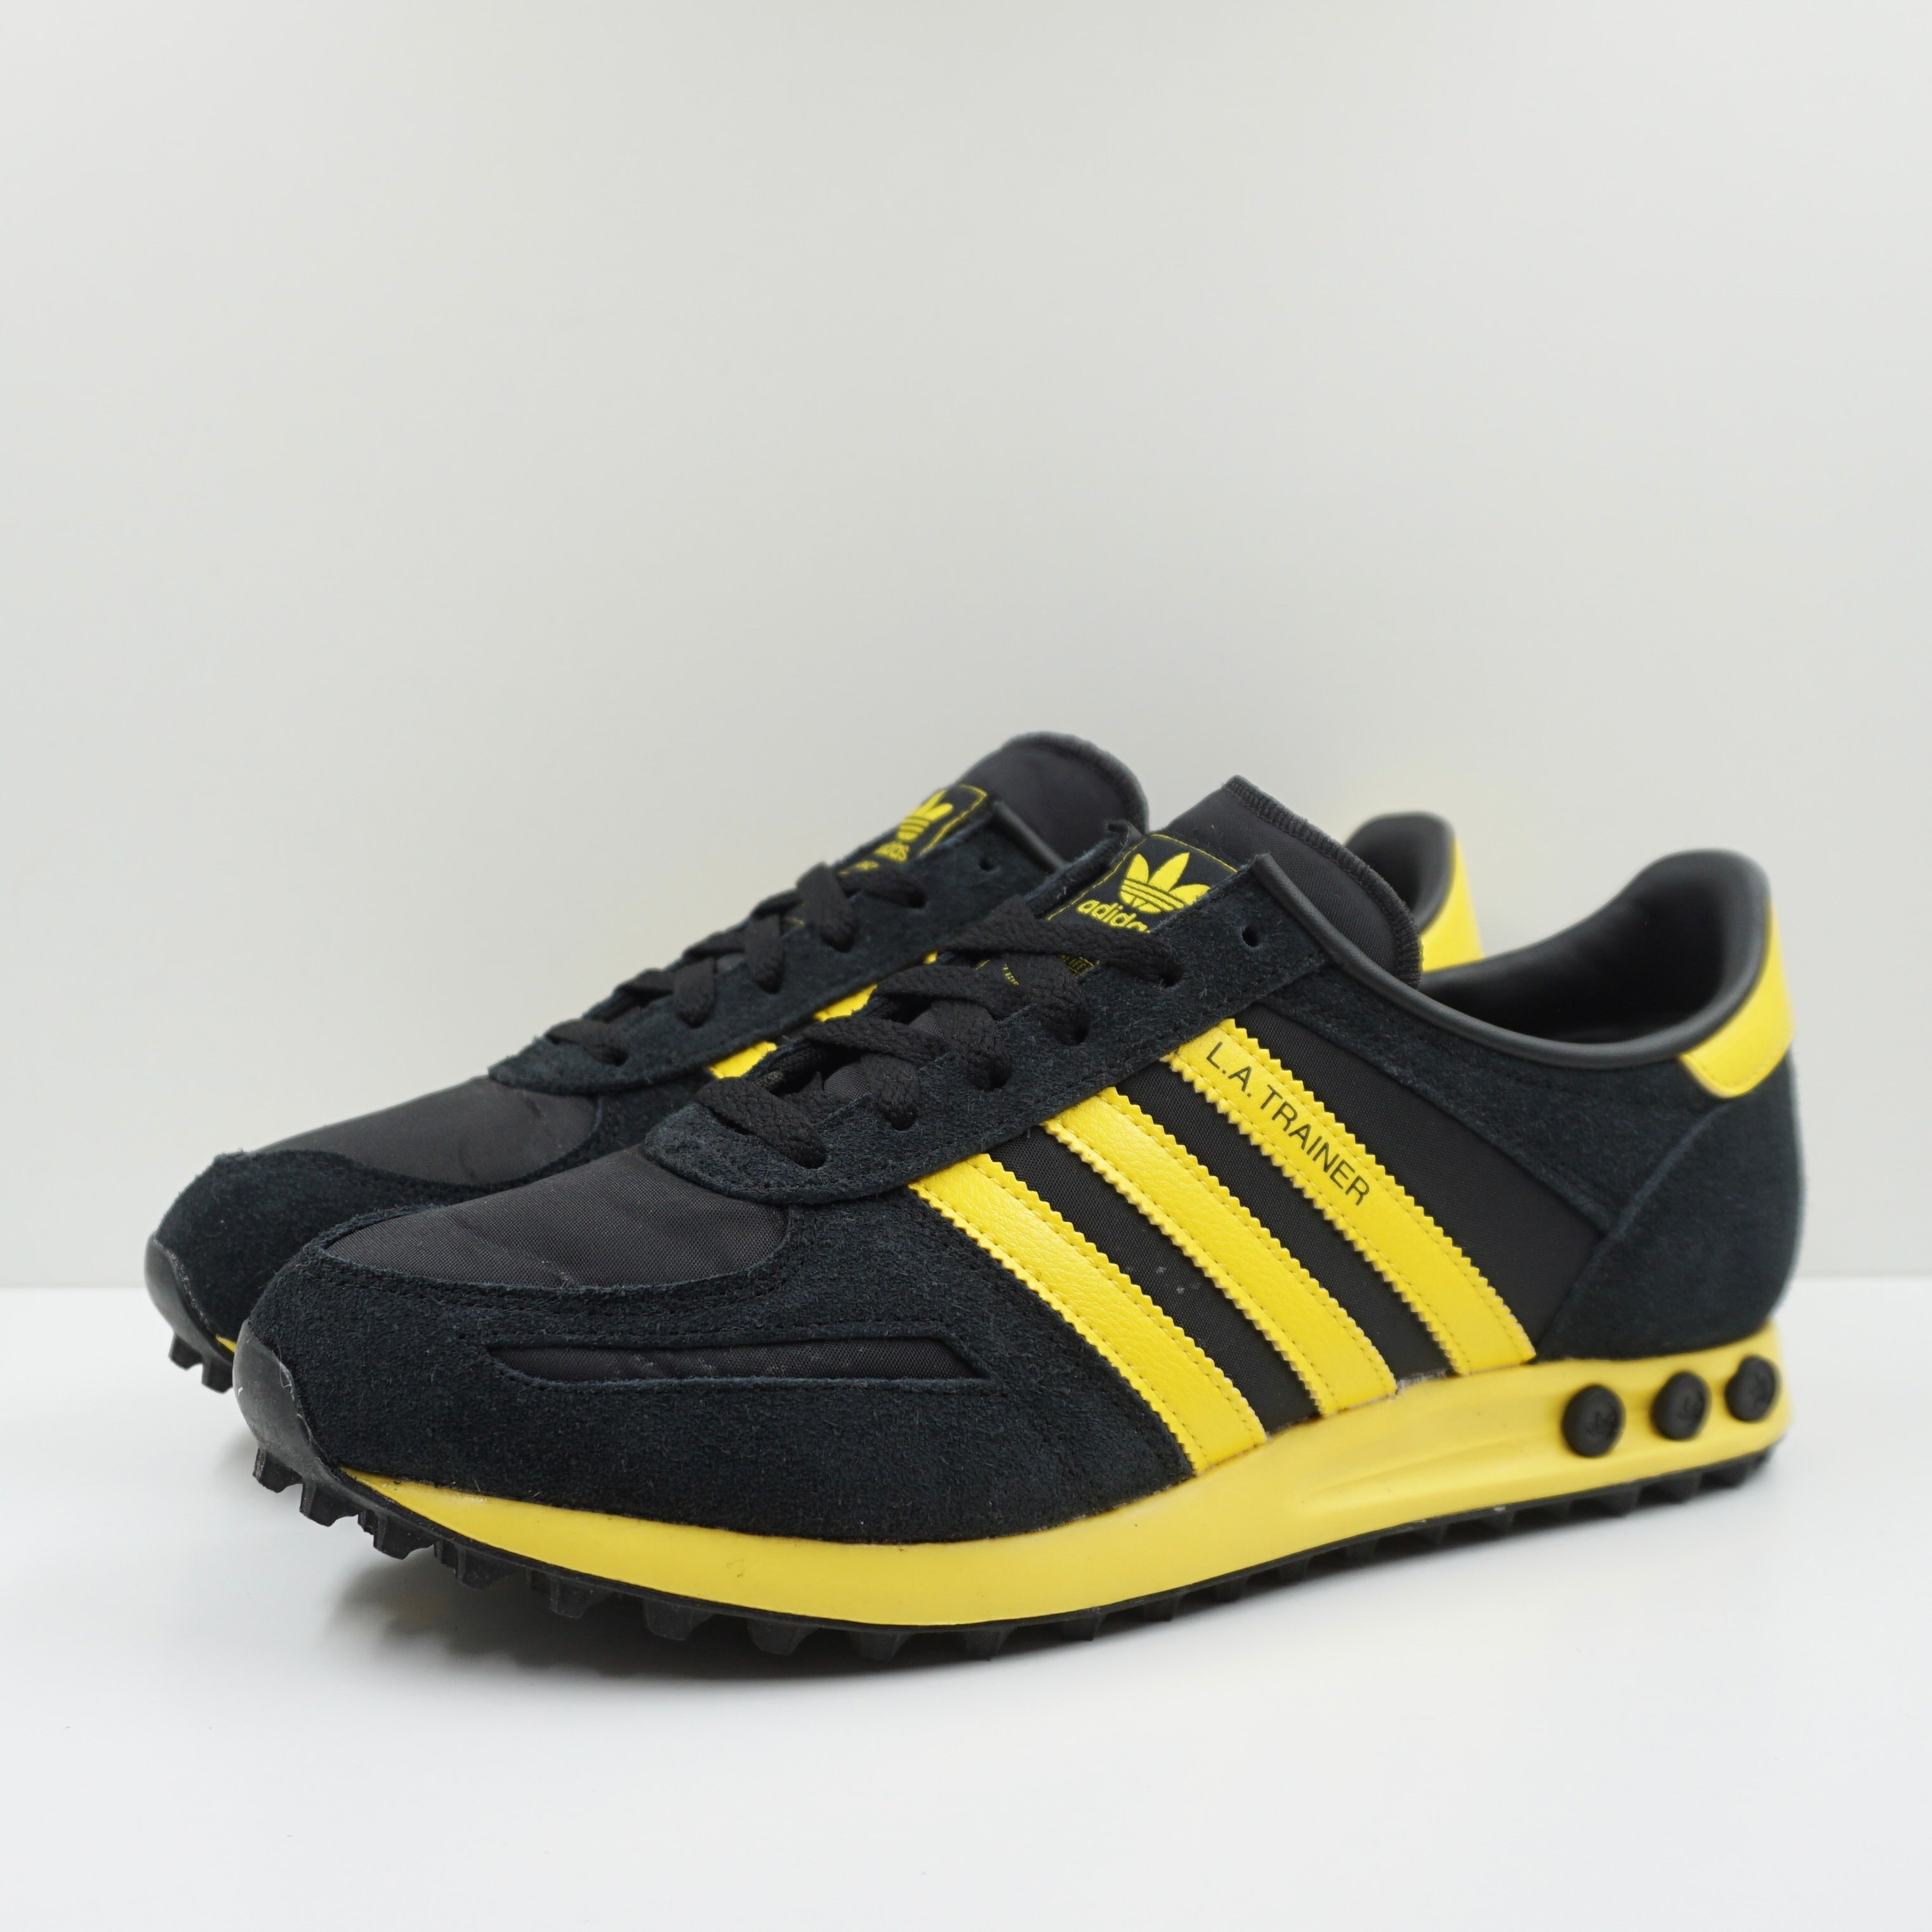 Adidas LA Trainer Black Yellow